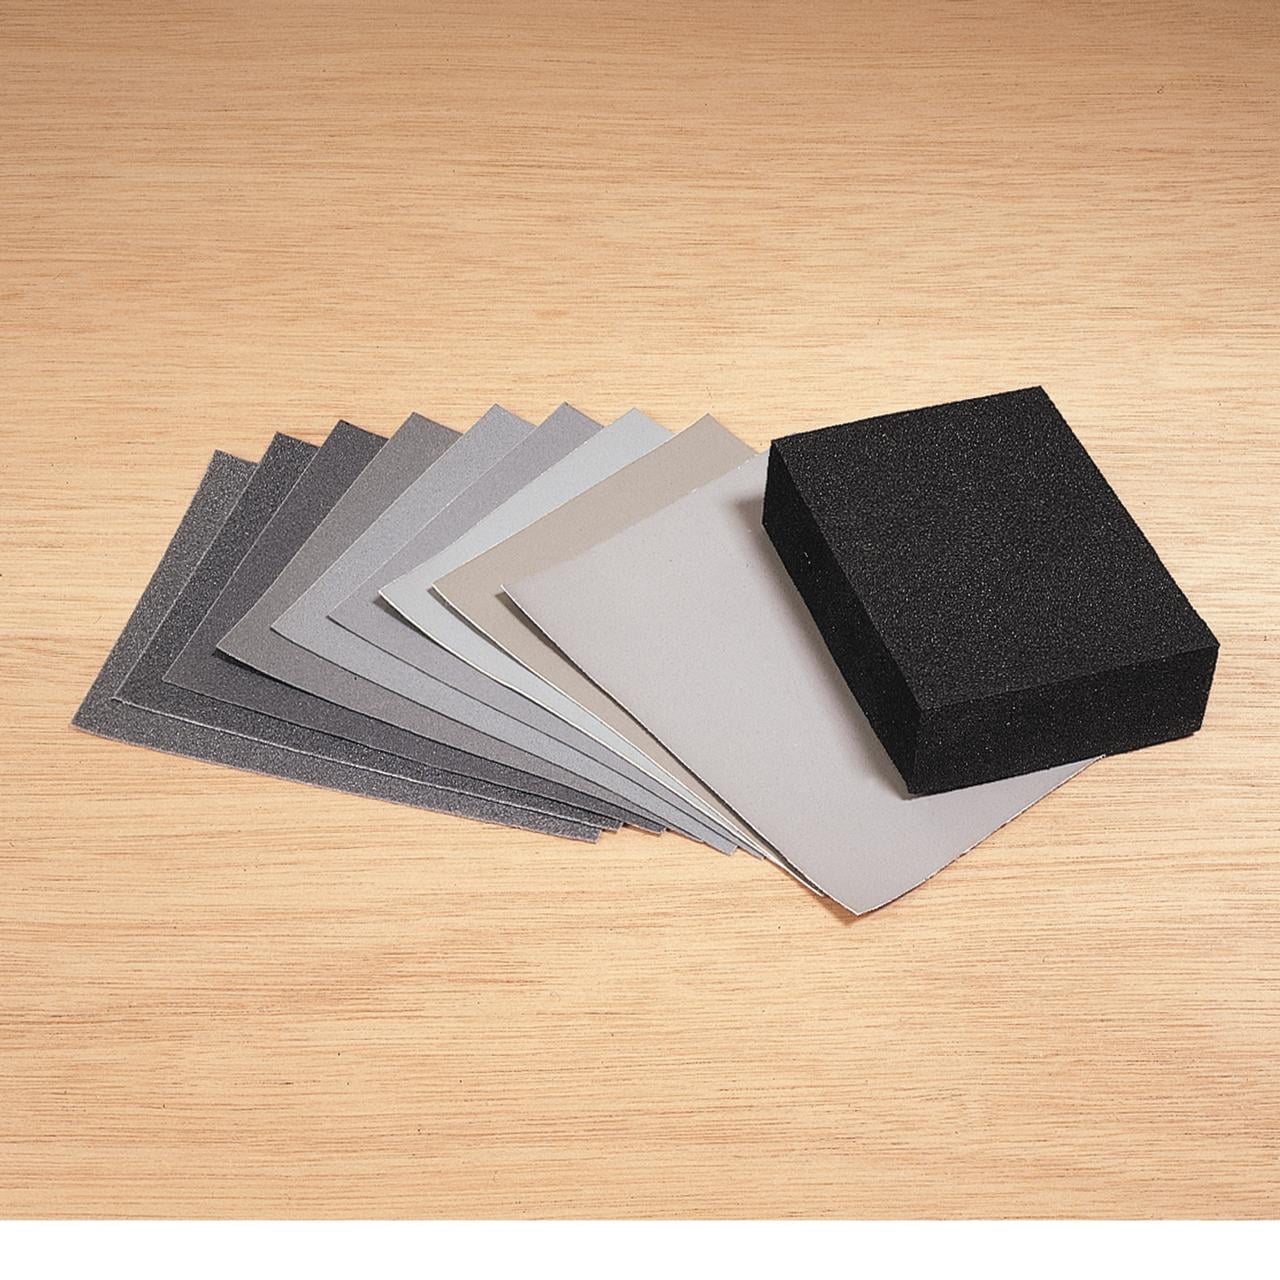 9 Sheets of 6"x4" Abrasive Polishing Cloth Kit MICRO-MESH Regular 